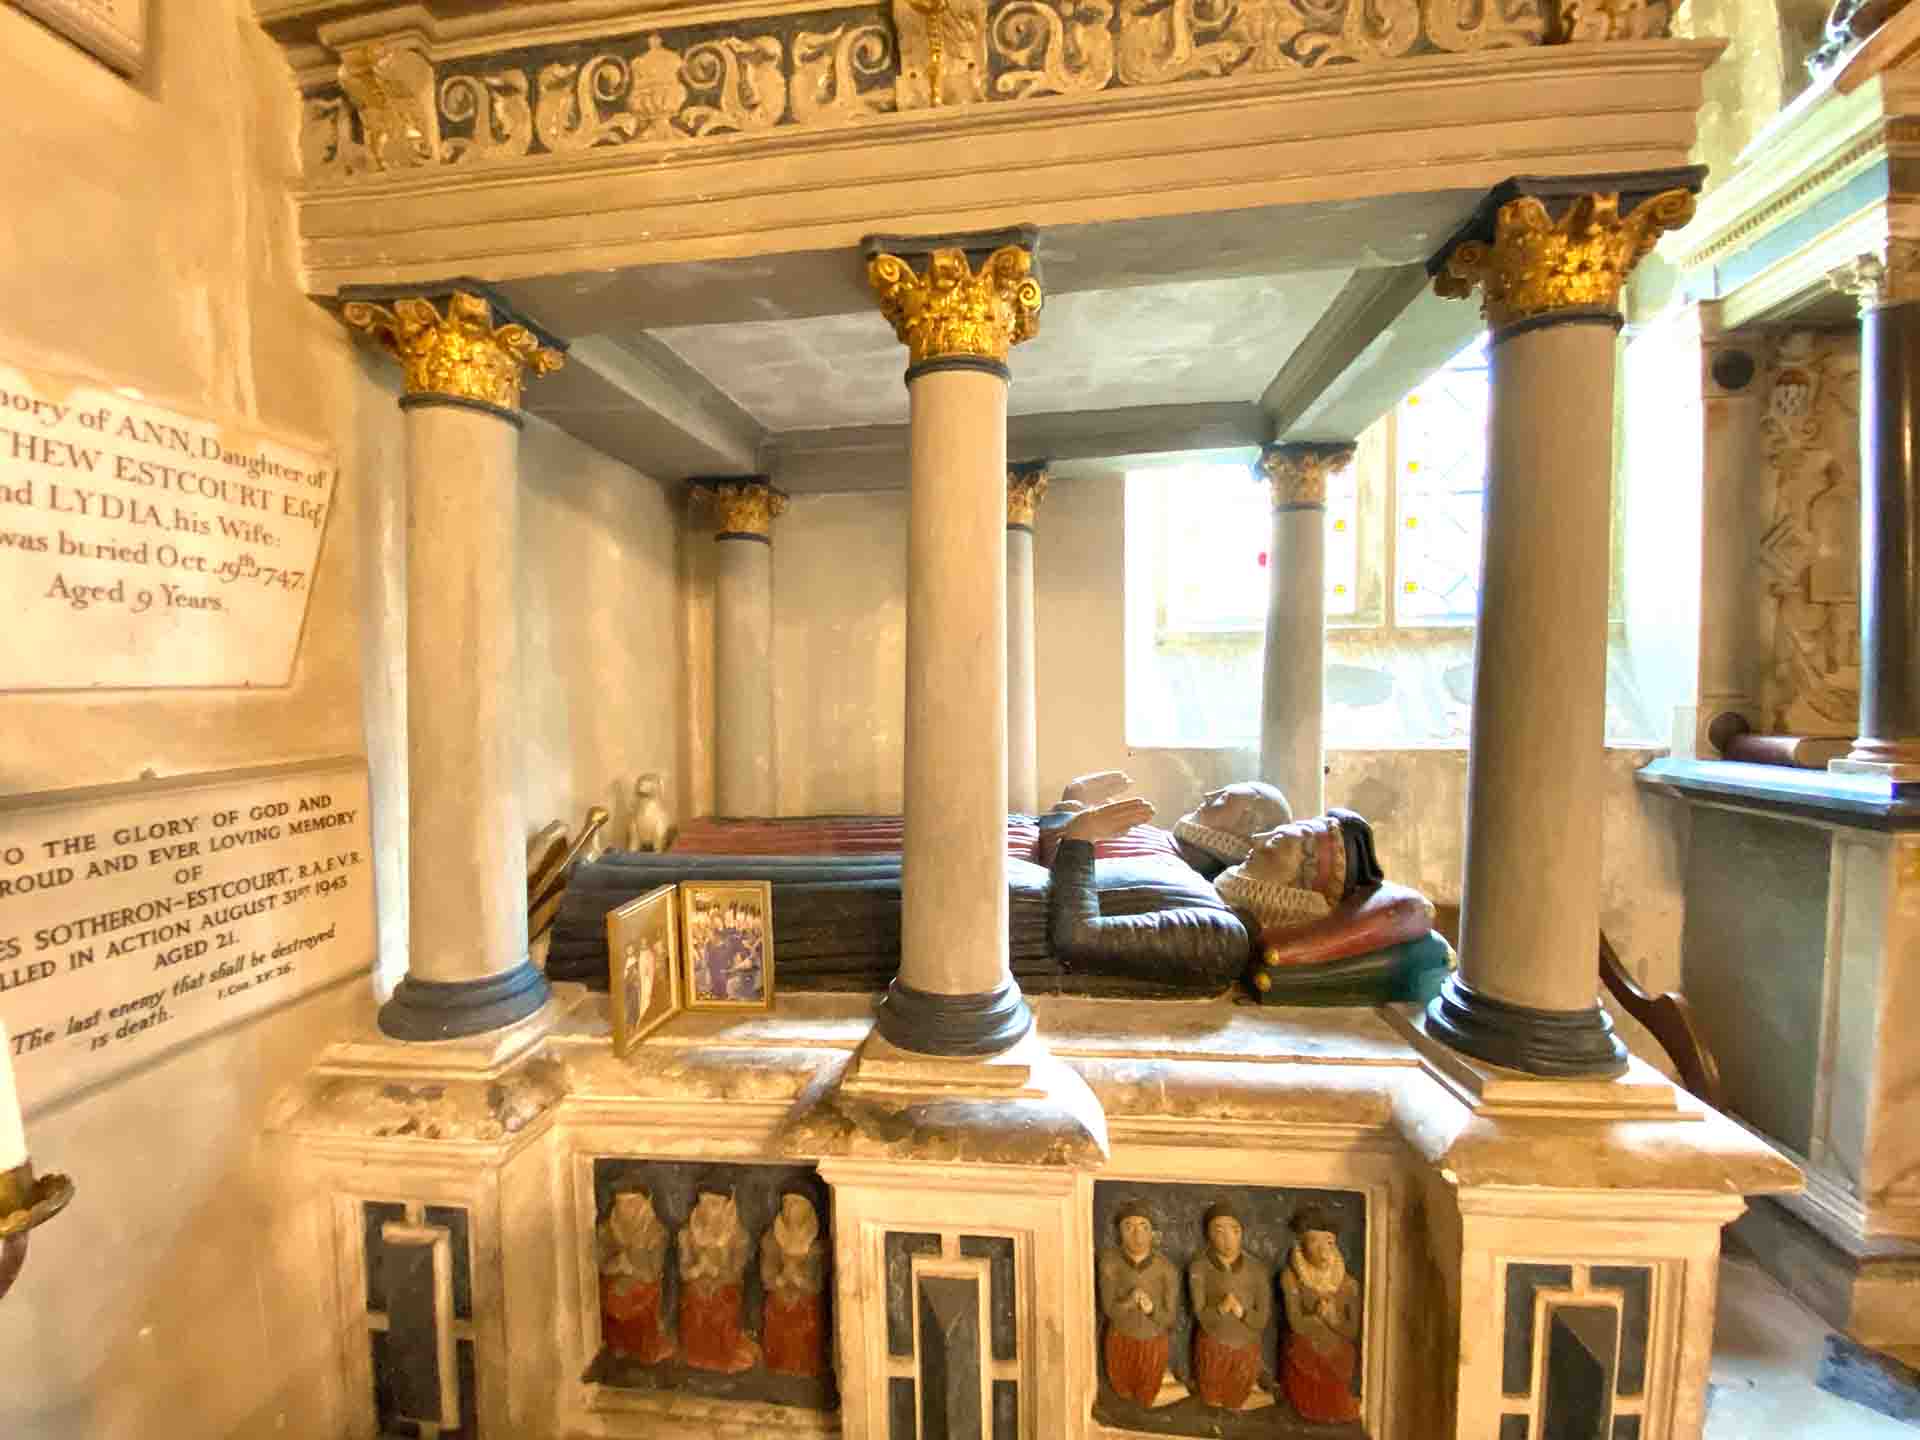 Canopied Tomb In The Estcourt Chapel of Shipton Moyne Church